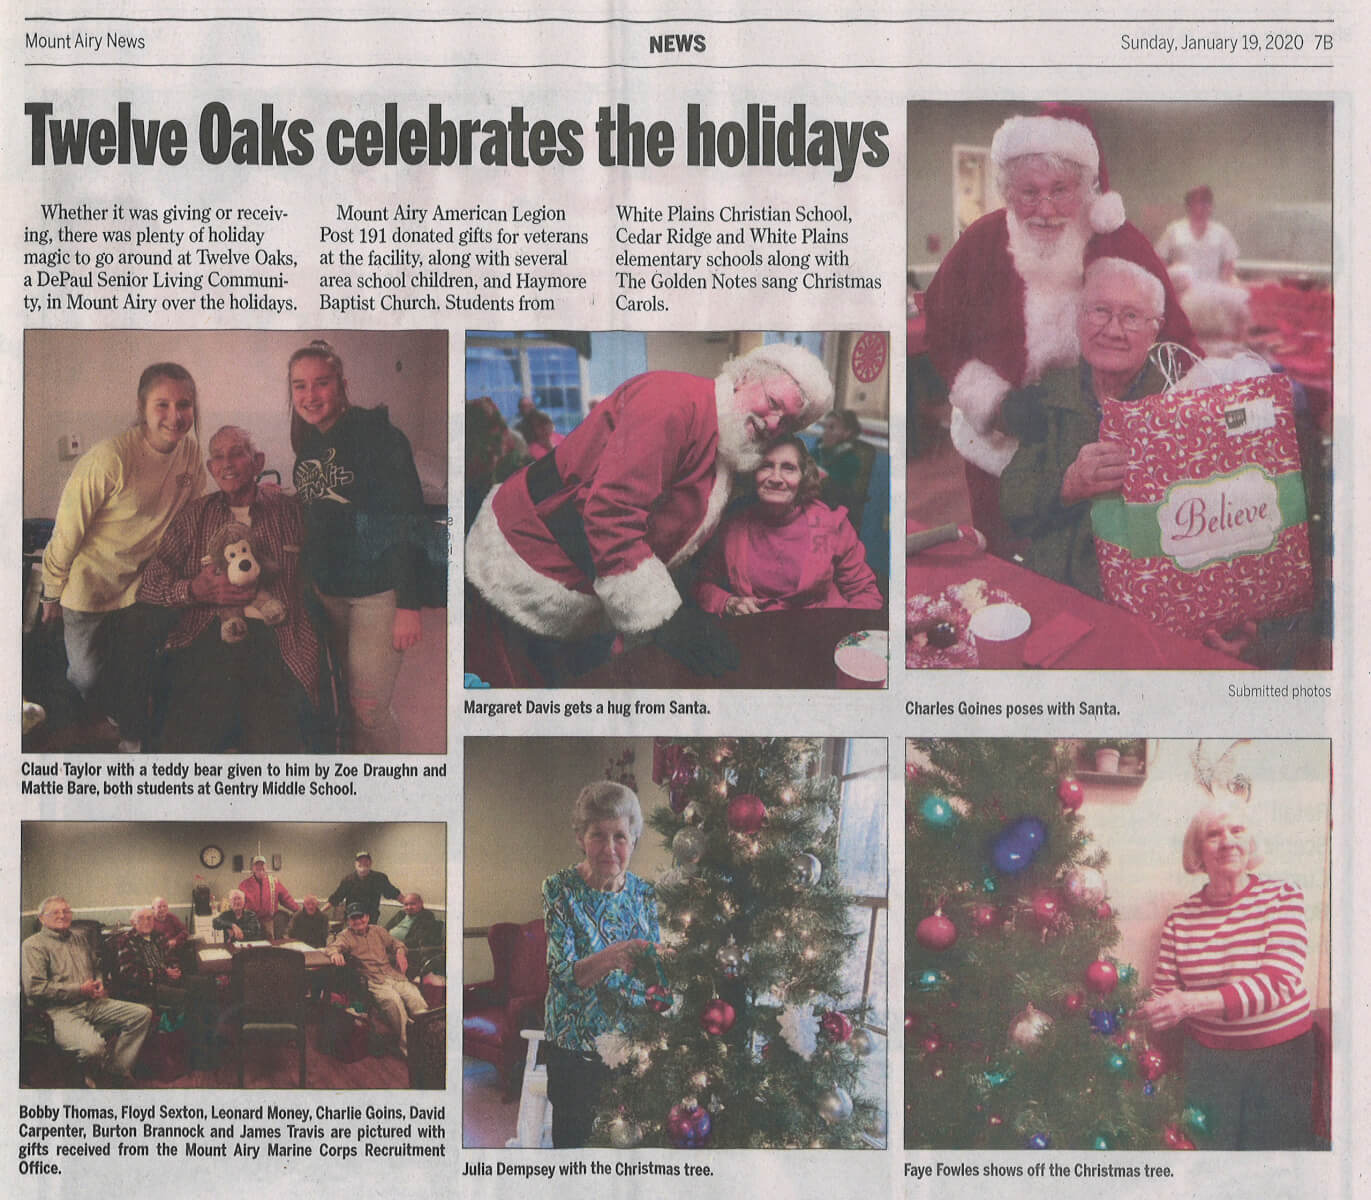 Twelve Oaks Holidays, 1.19.20 Mt. Airy News (cropped)